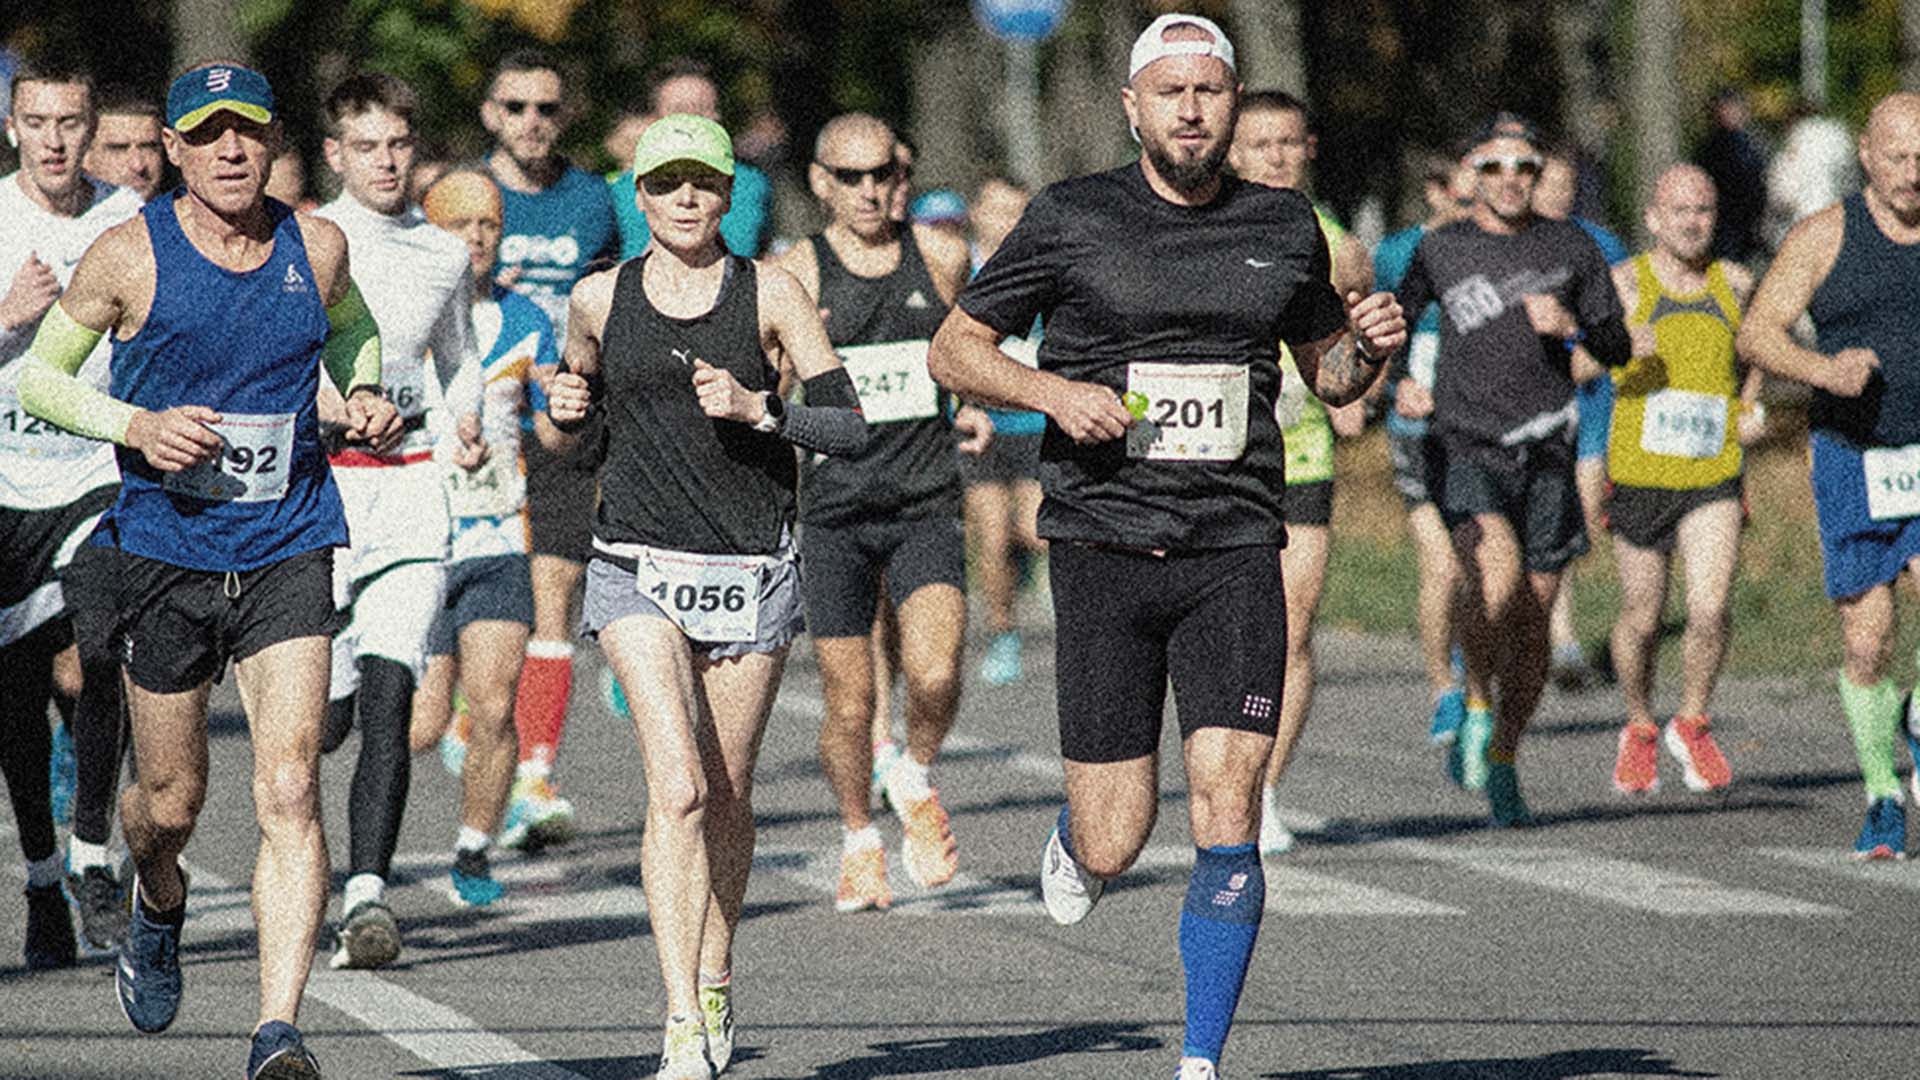 Photo focussed on marathon runner, running at a race.